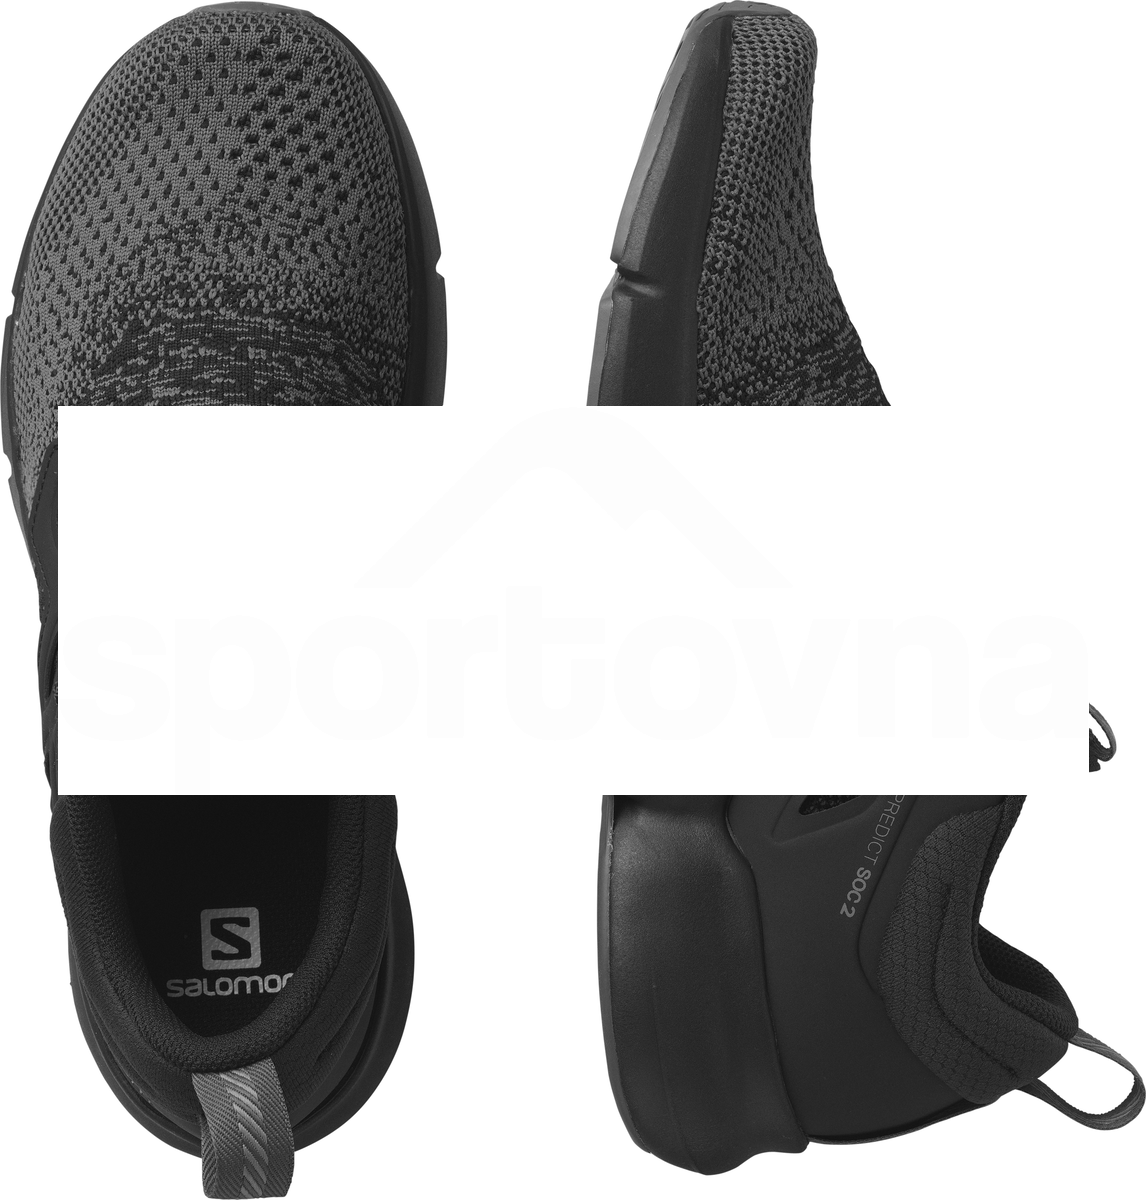 Obuv Salomon PREDICT SOC2 M - šedá/černá